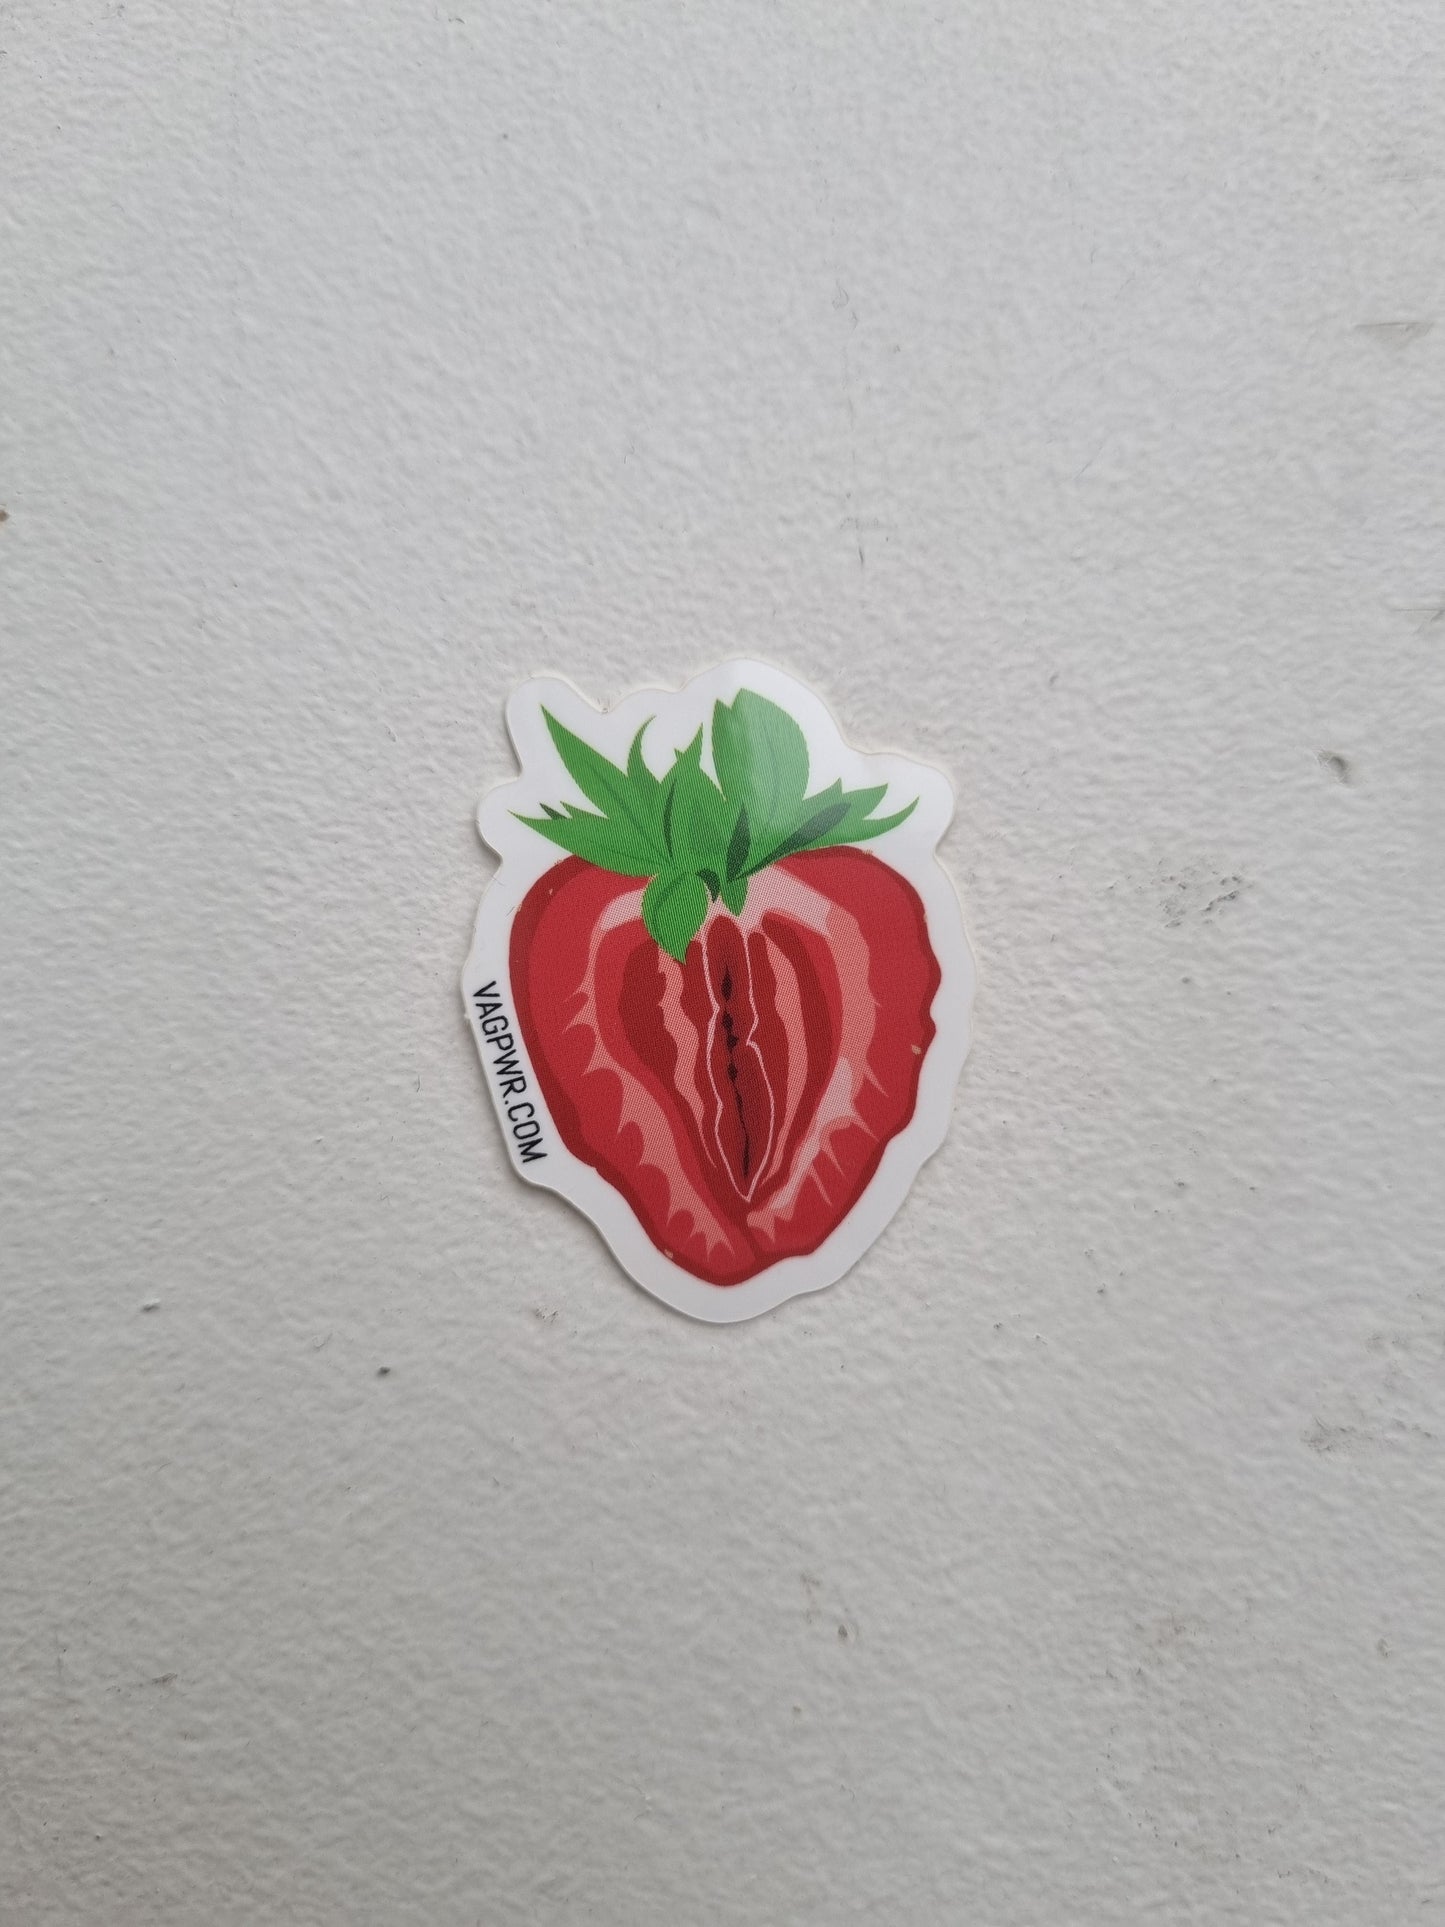 VAGPWR Stickers Sticker - Vagberry